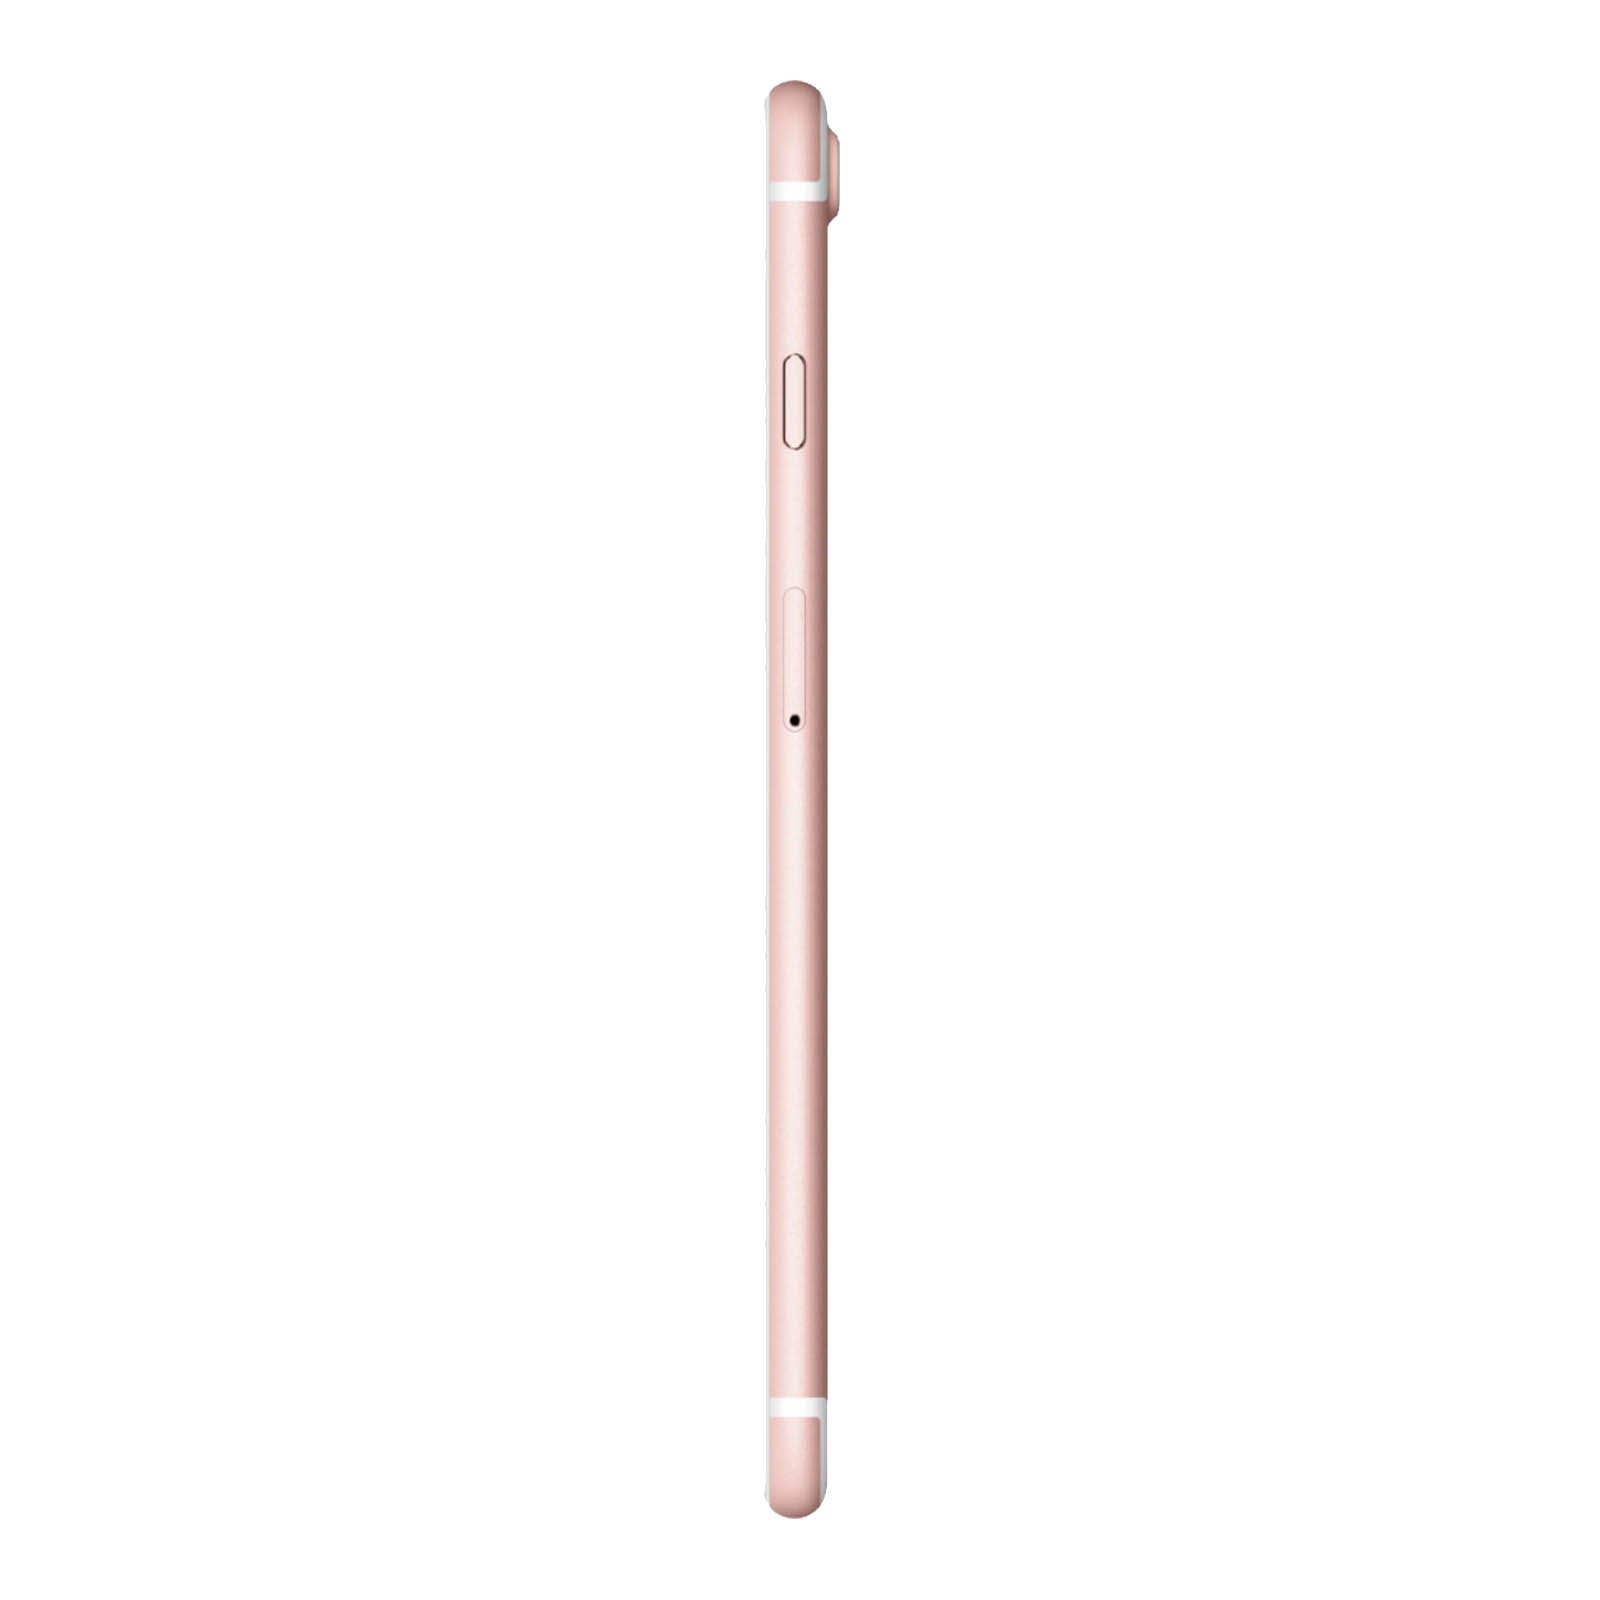 Apple iPhone 7 Plus 32GB Rose Gold Pristine - Unlocked